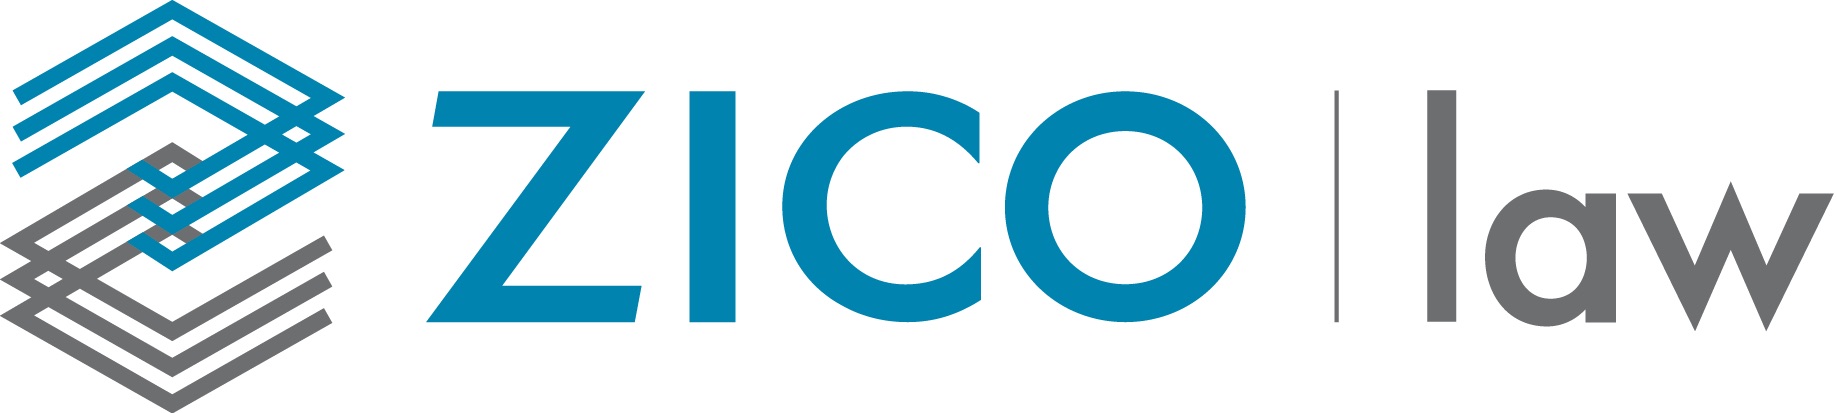 Zicolaw Logo-Pantone